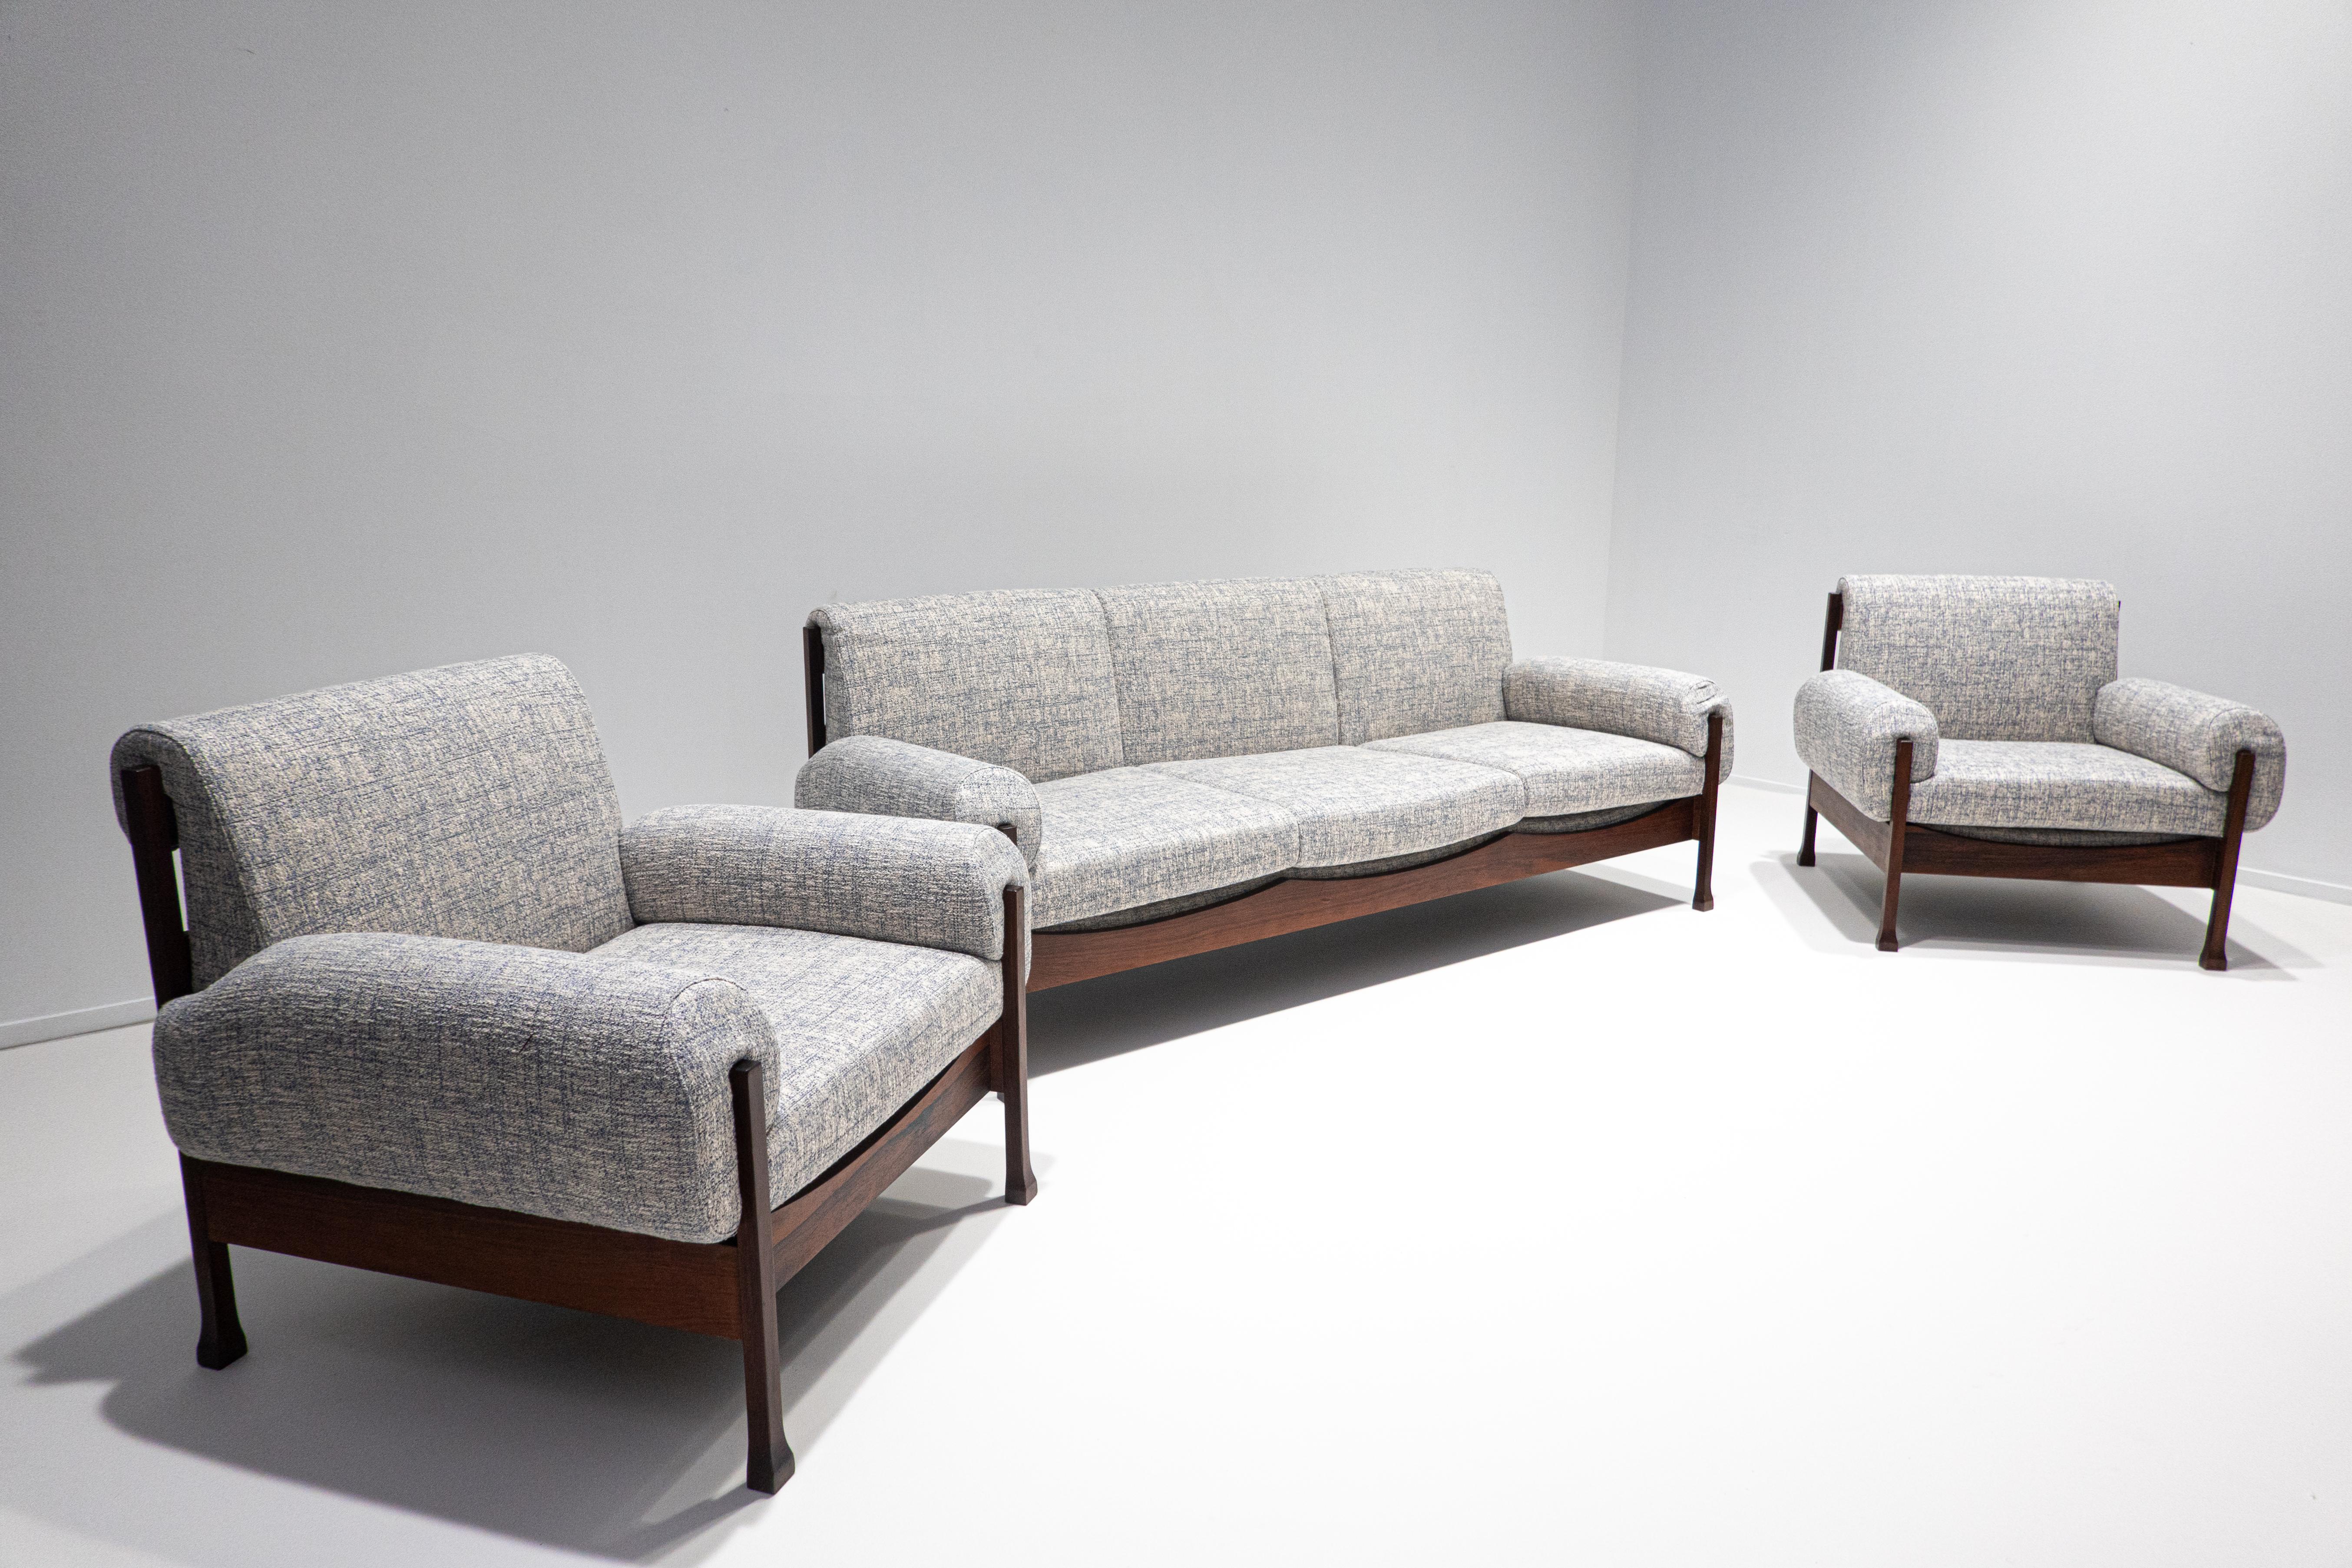 Mid-Century Modern Italian sofa, wood and fabric, 1960s.